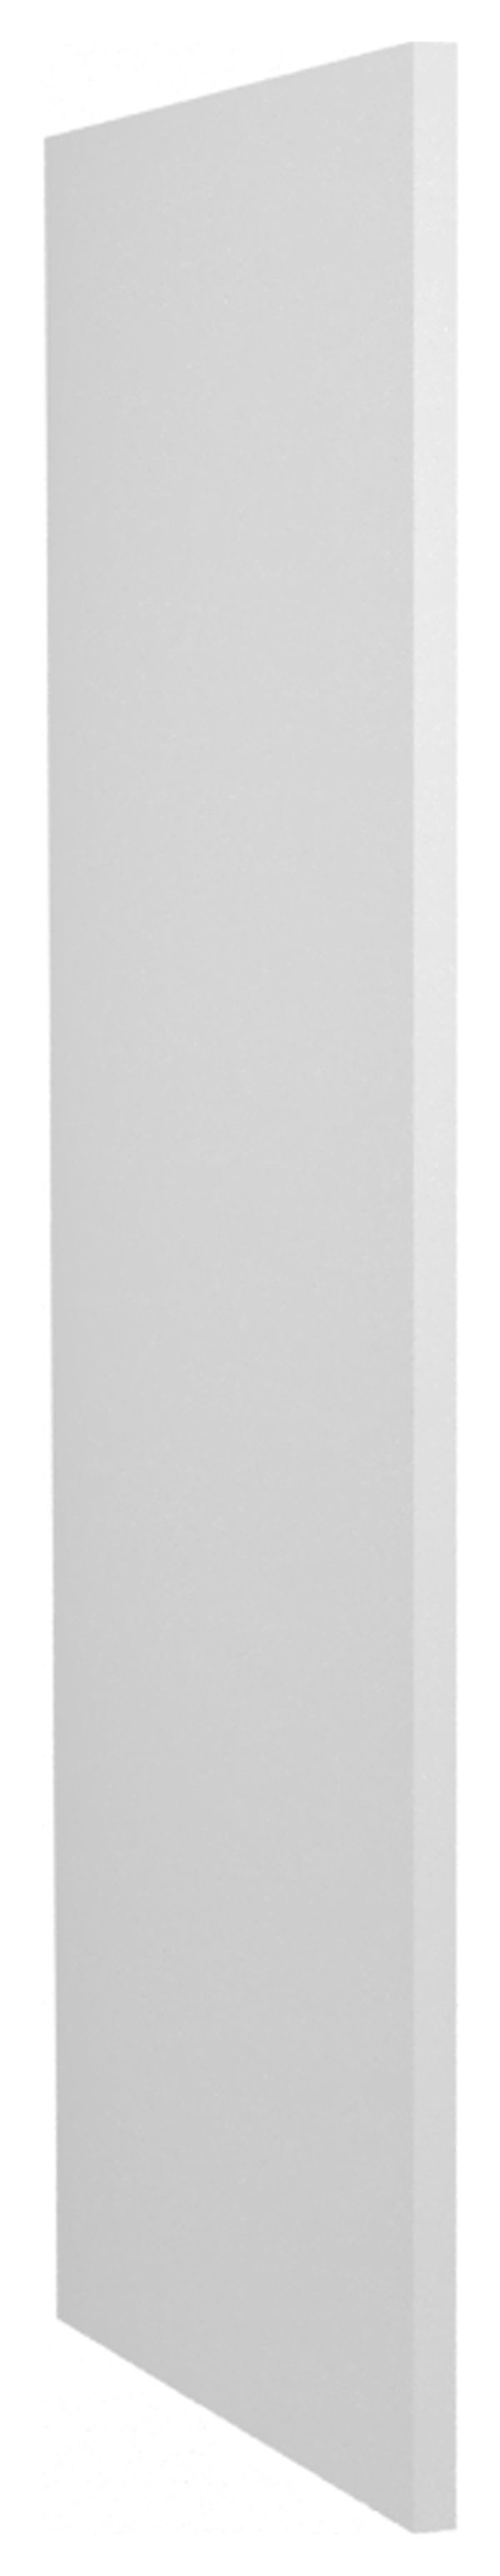 Image of Wickes Ohio Grey Shaker Decor Wall Panel - 18mm